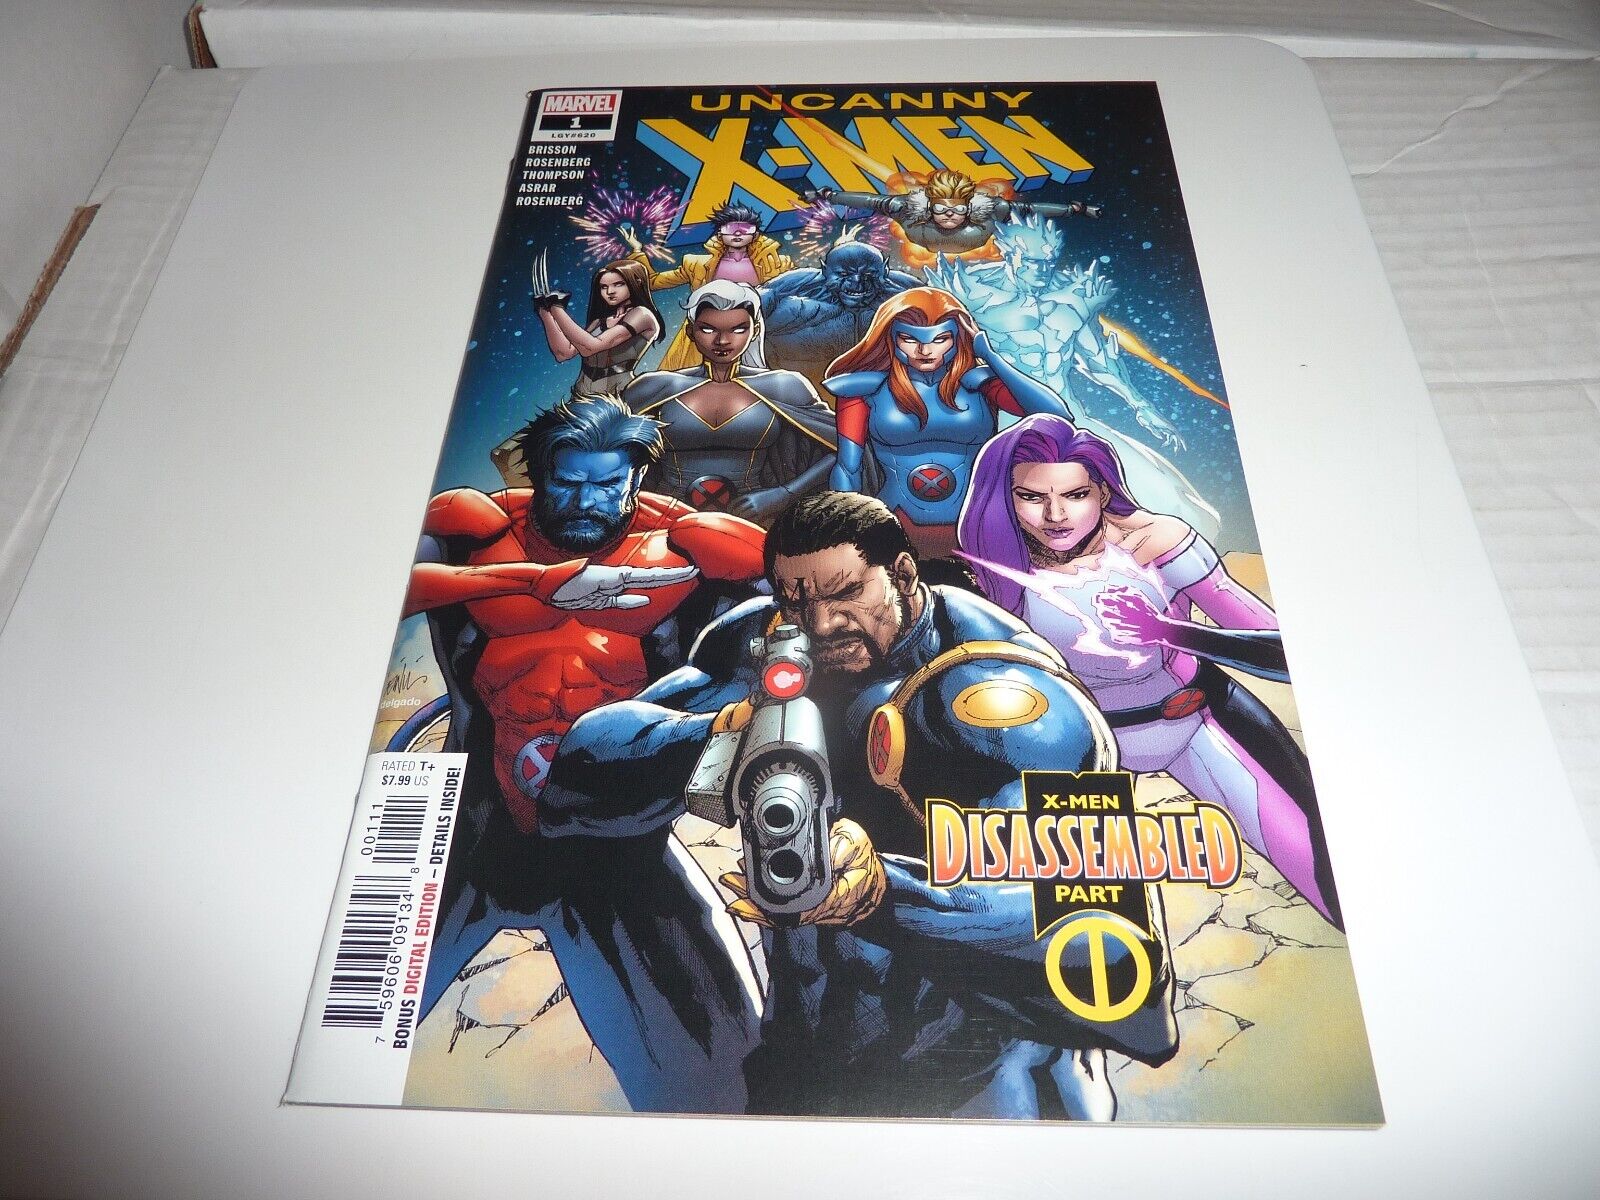 THE UNCANNY X-MEN #1 LGY #620 Marvel Jan 2019 1st Print NM Cover C